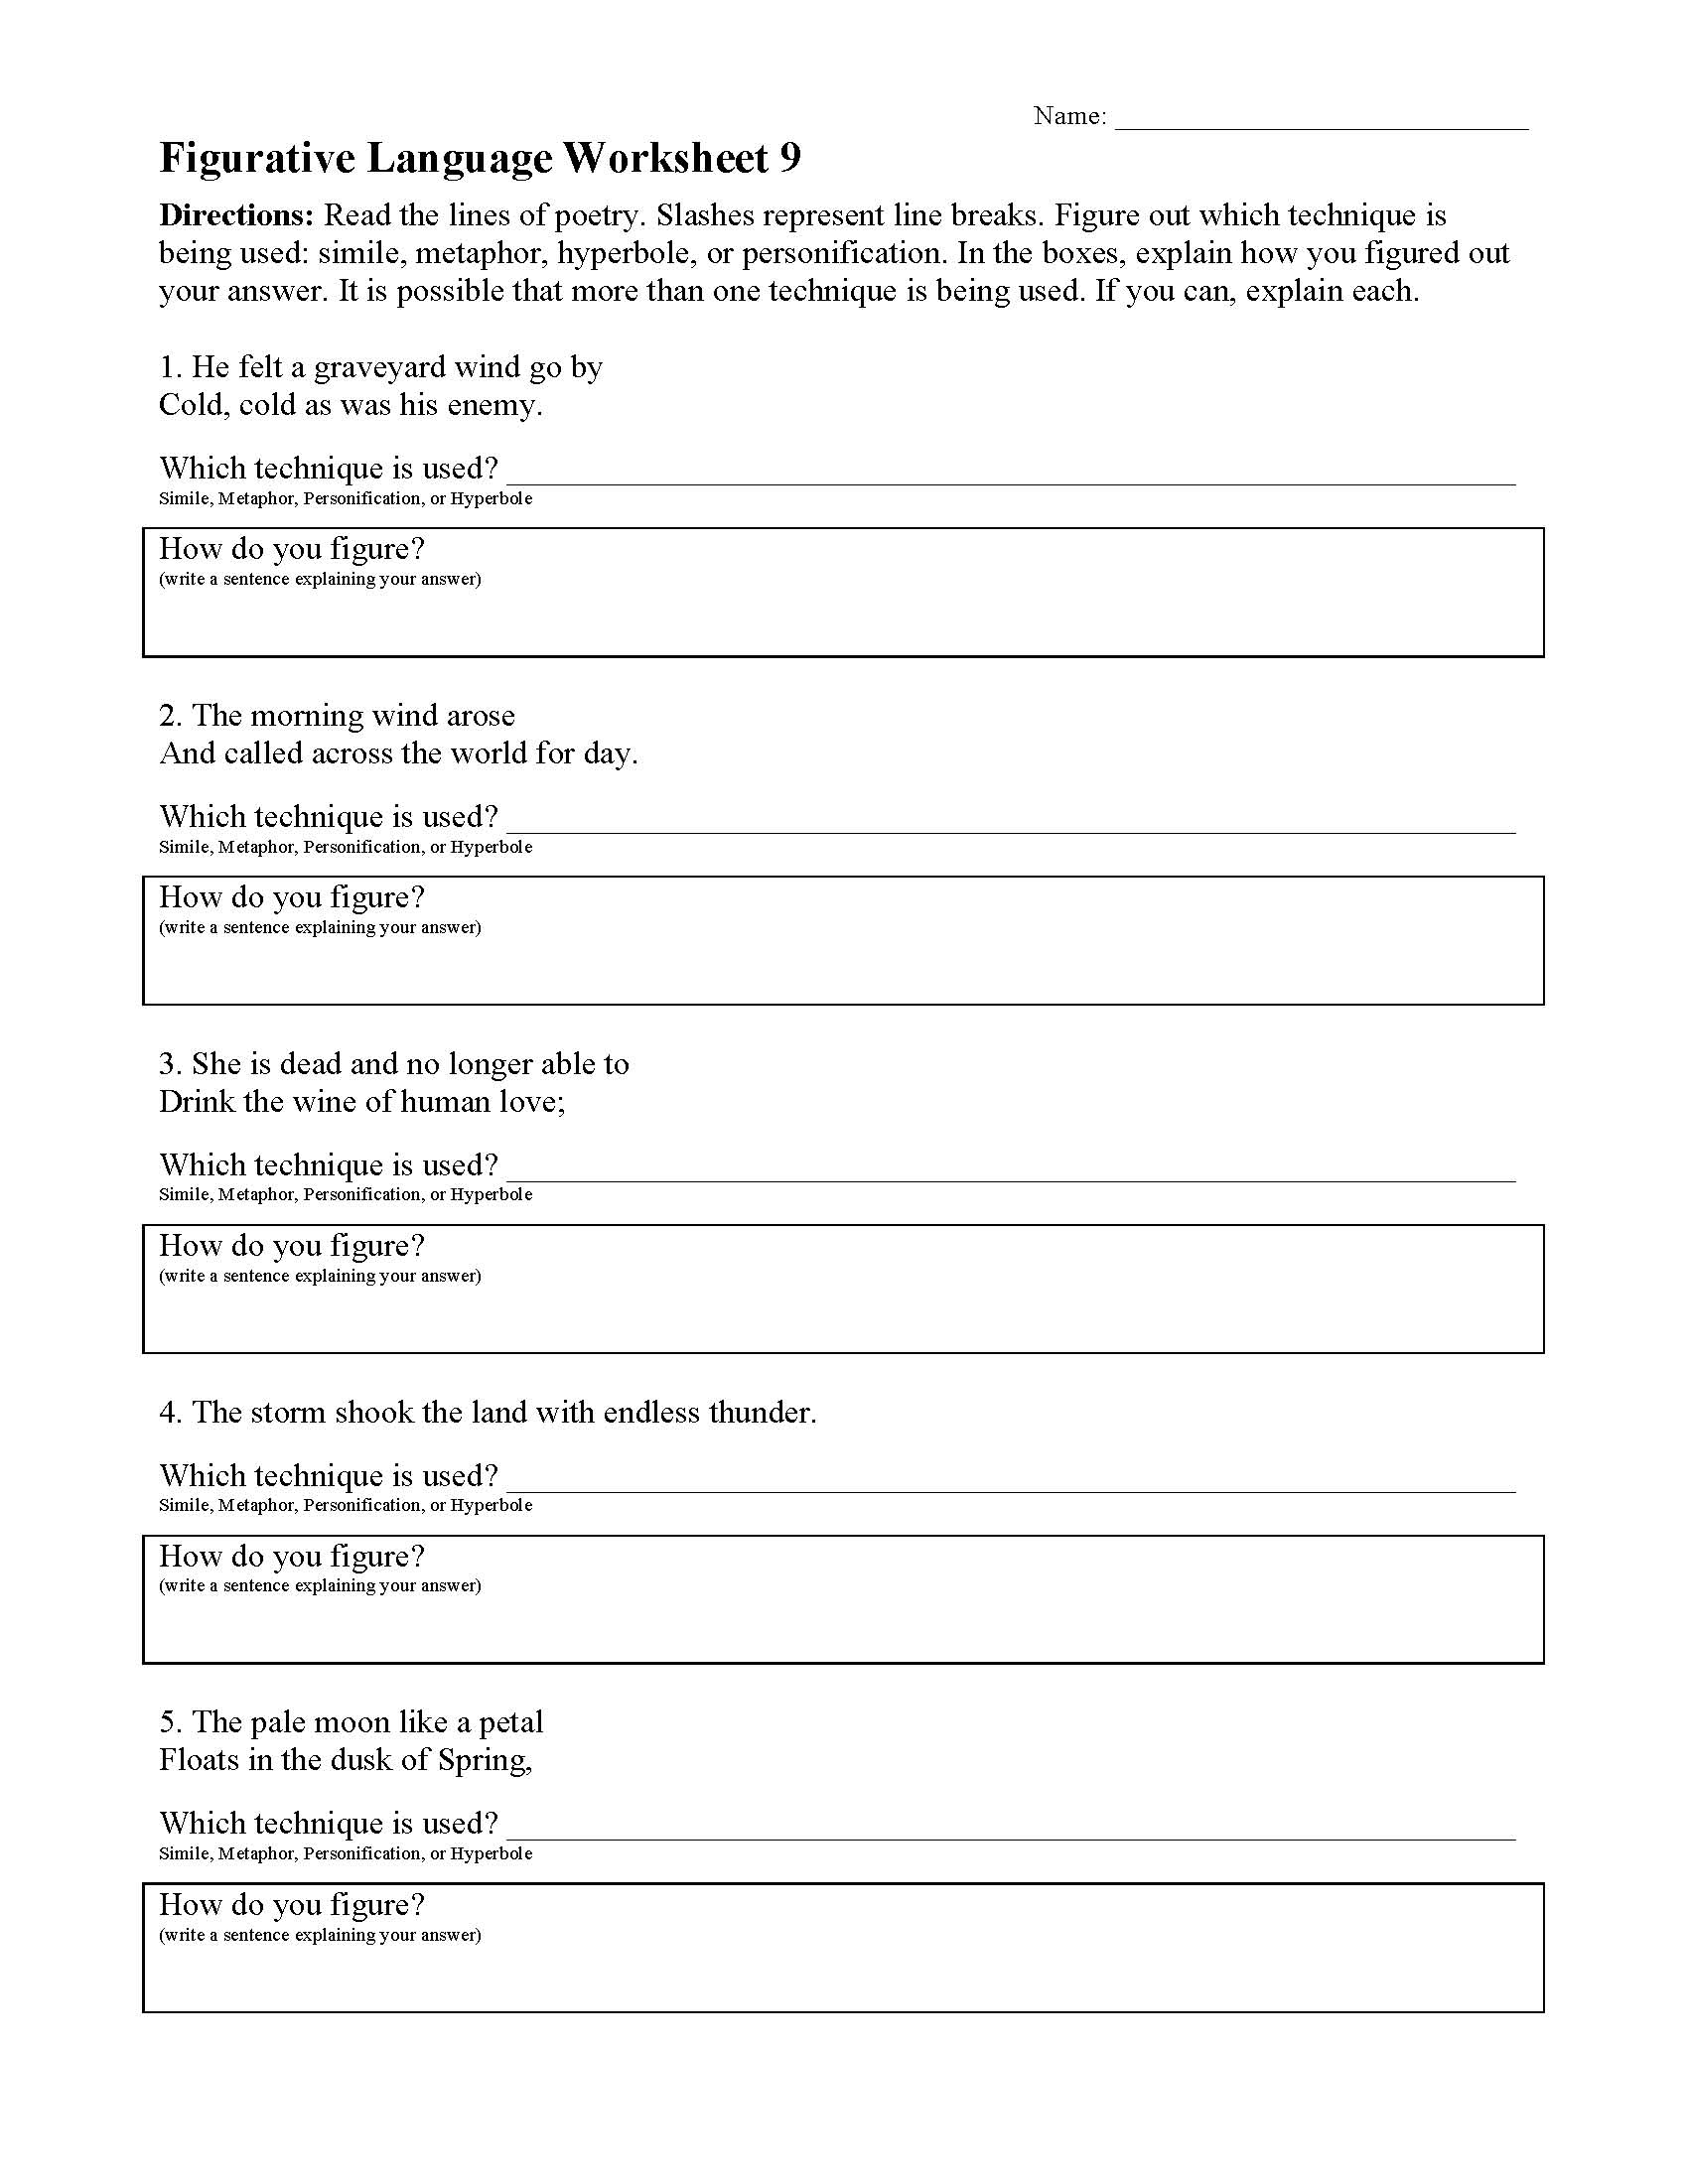 Figurative Language Worksheet 9 Reading Activity - 9th Grade English Worksheets Free Printable